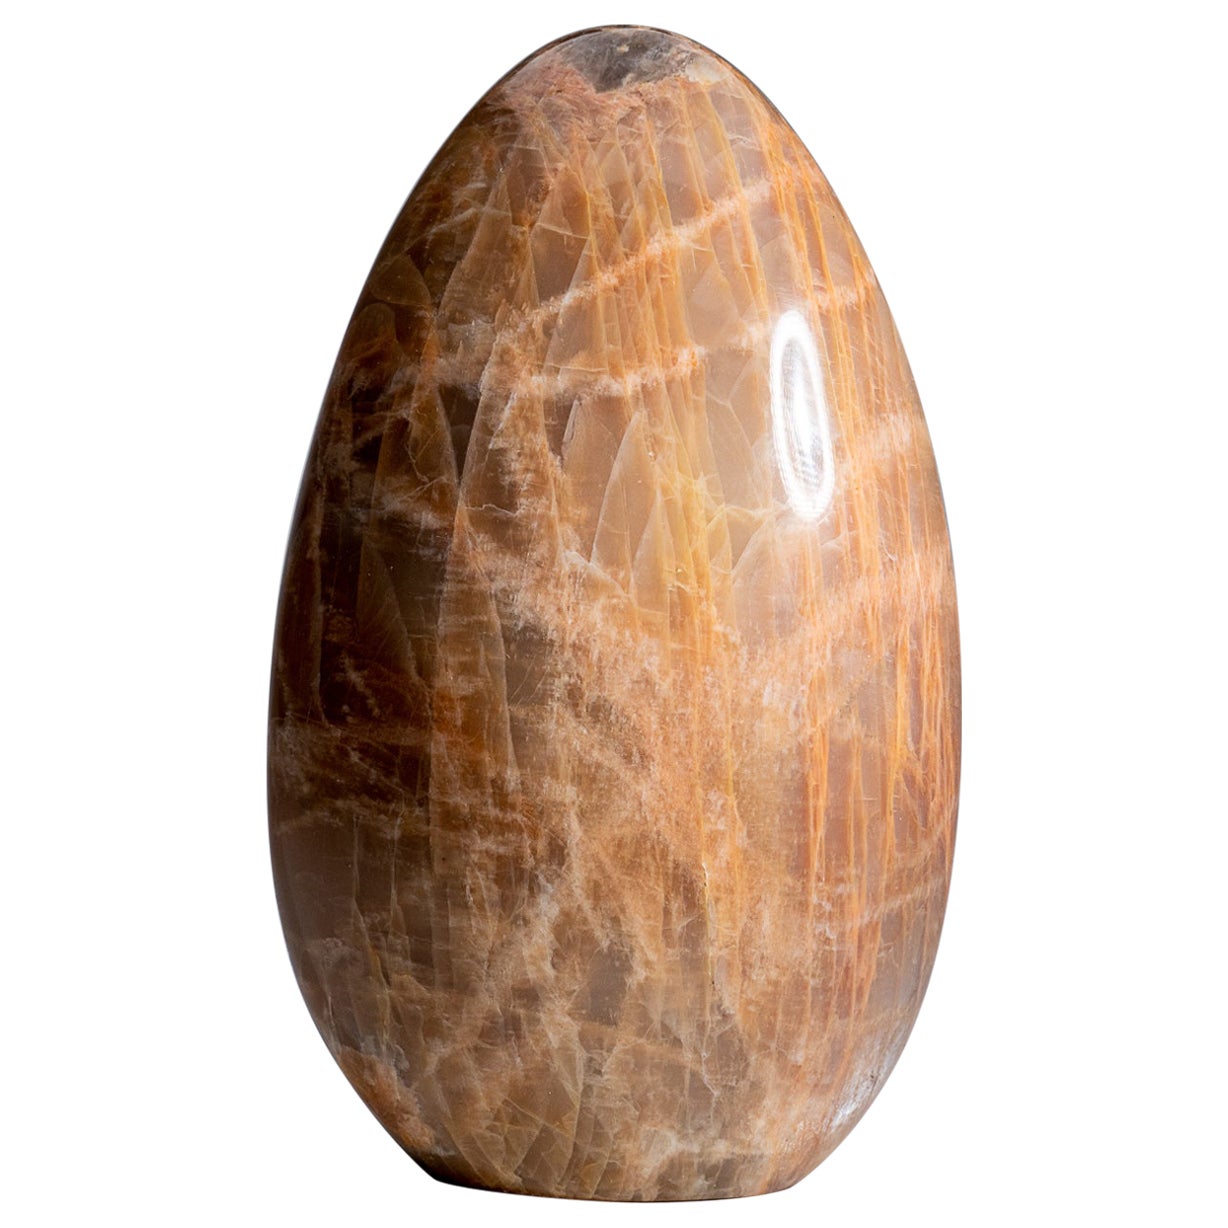 Genuine Polished Peach Moonstone Freeform from Madagascar (6.5 lbs) For Sale